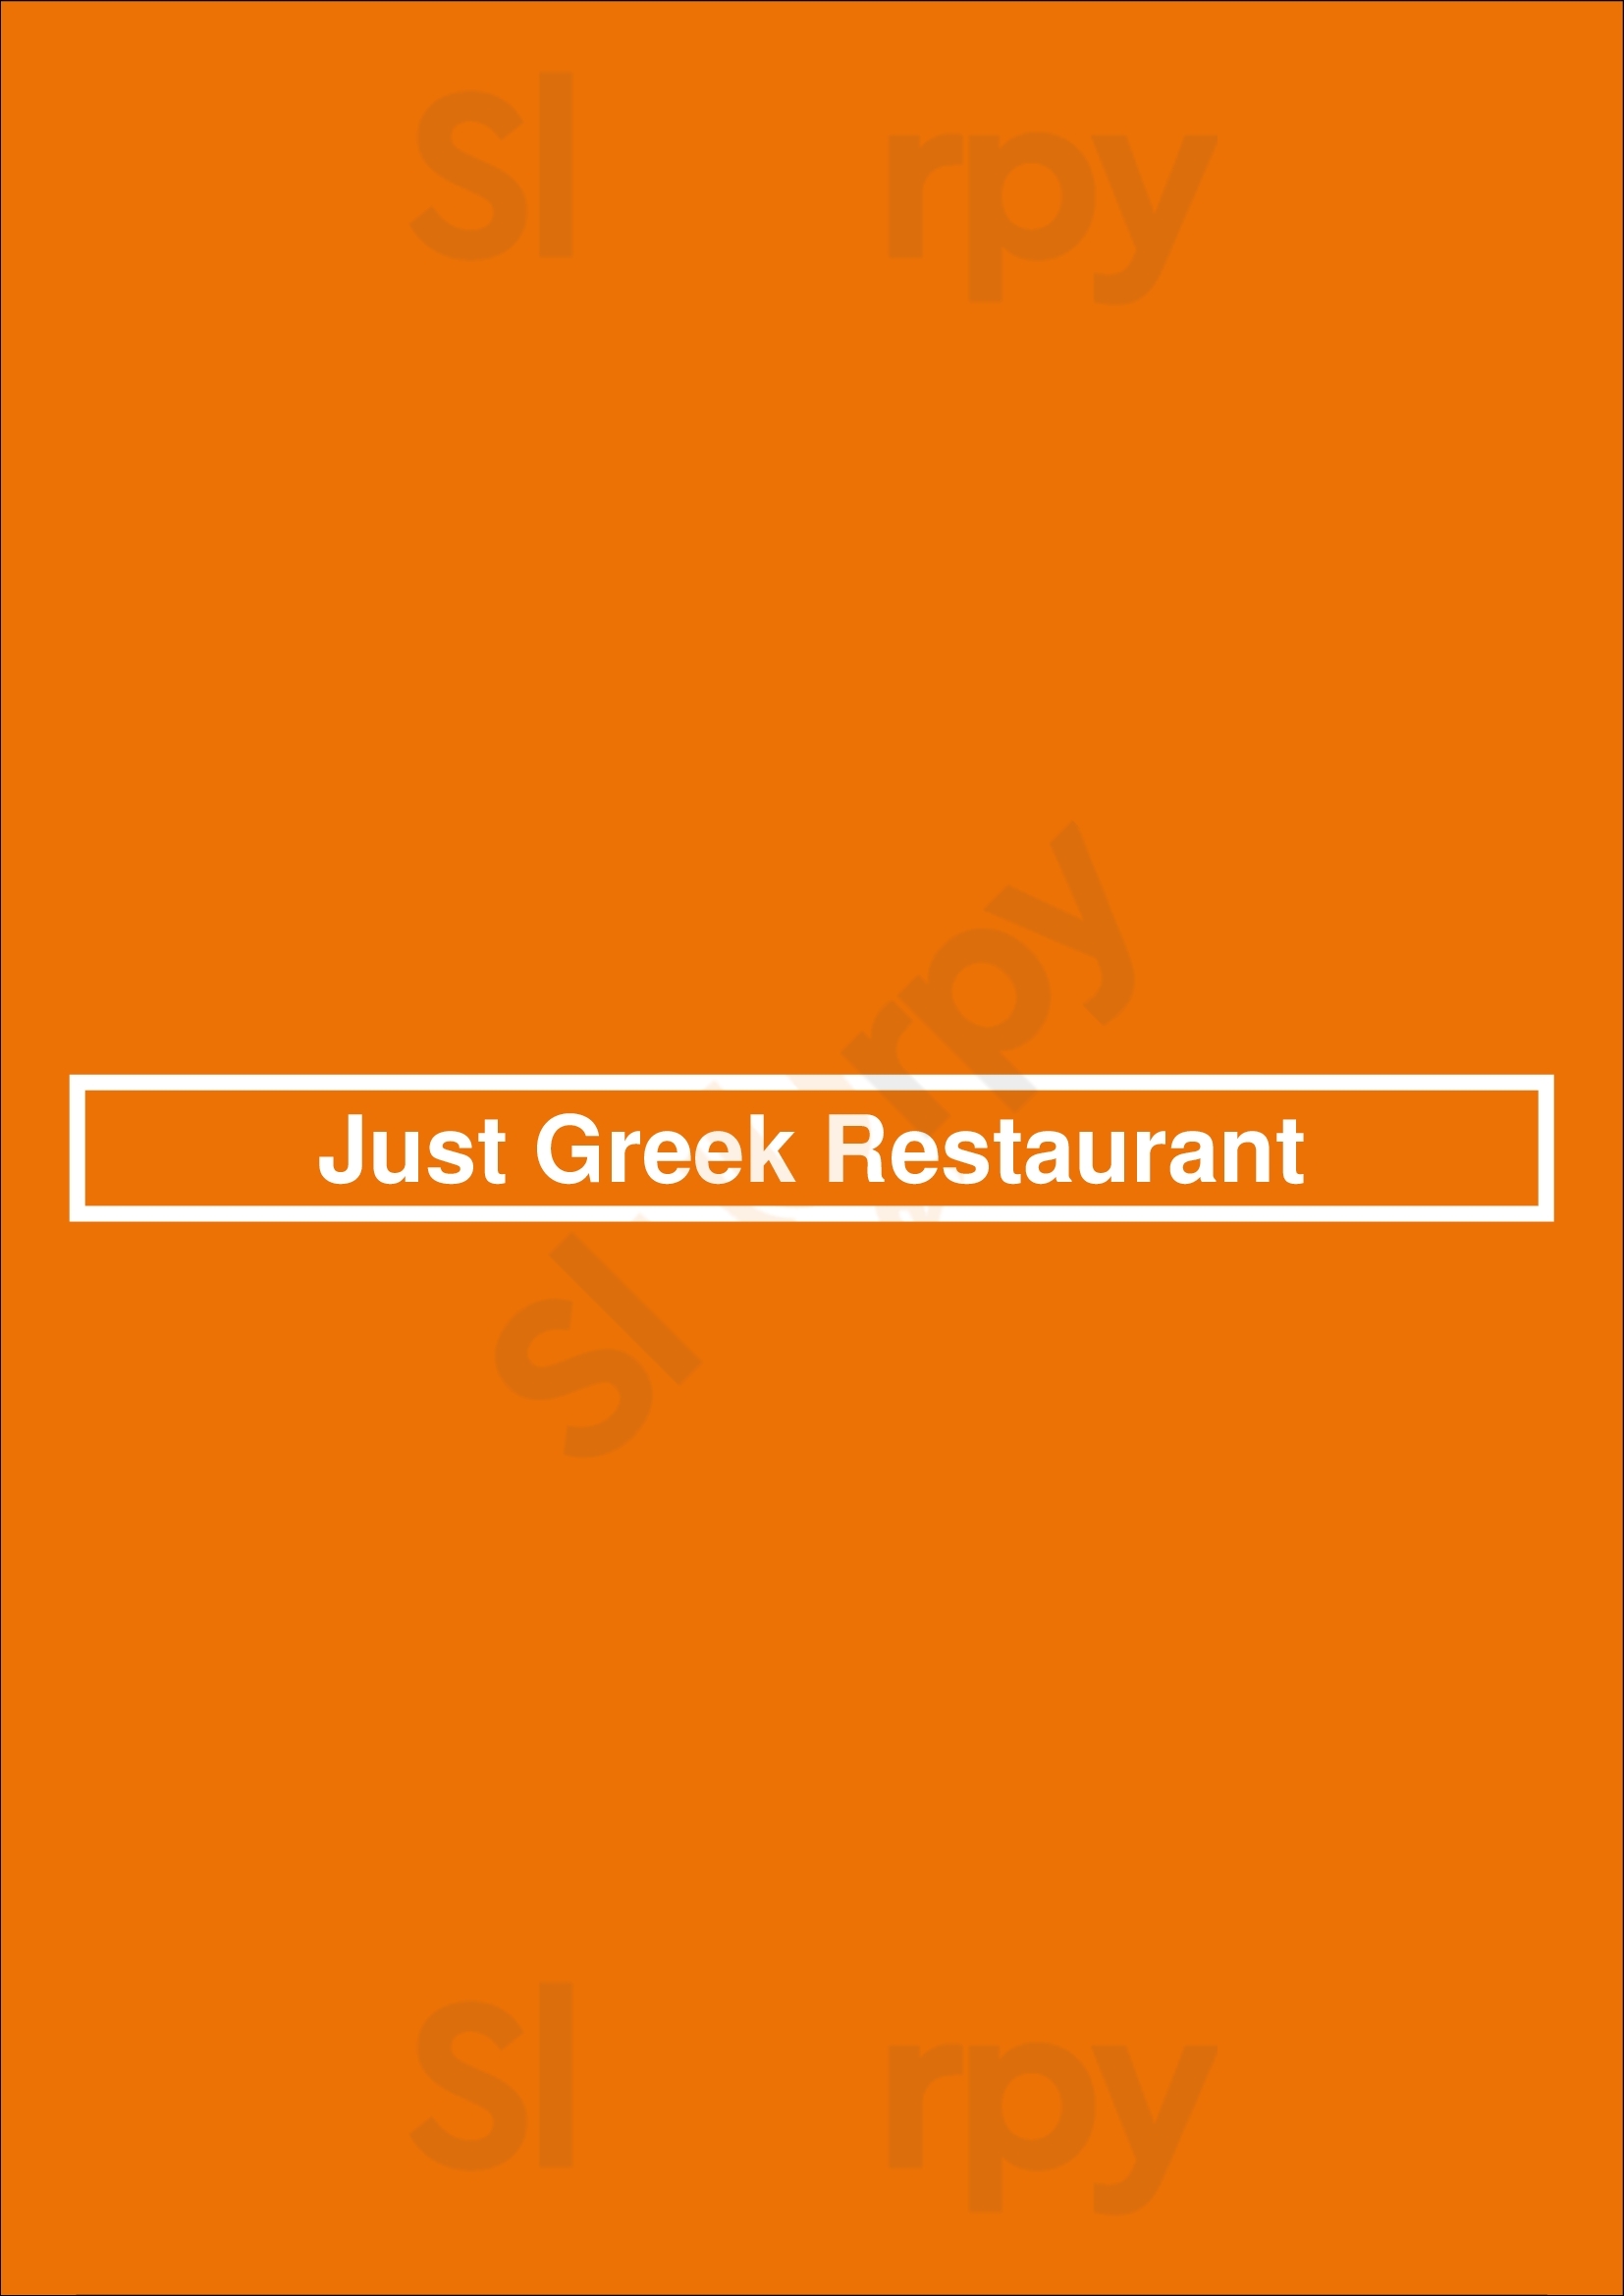 Just Greek Restaurant Toronto Menu - 1